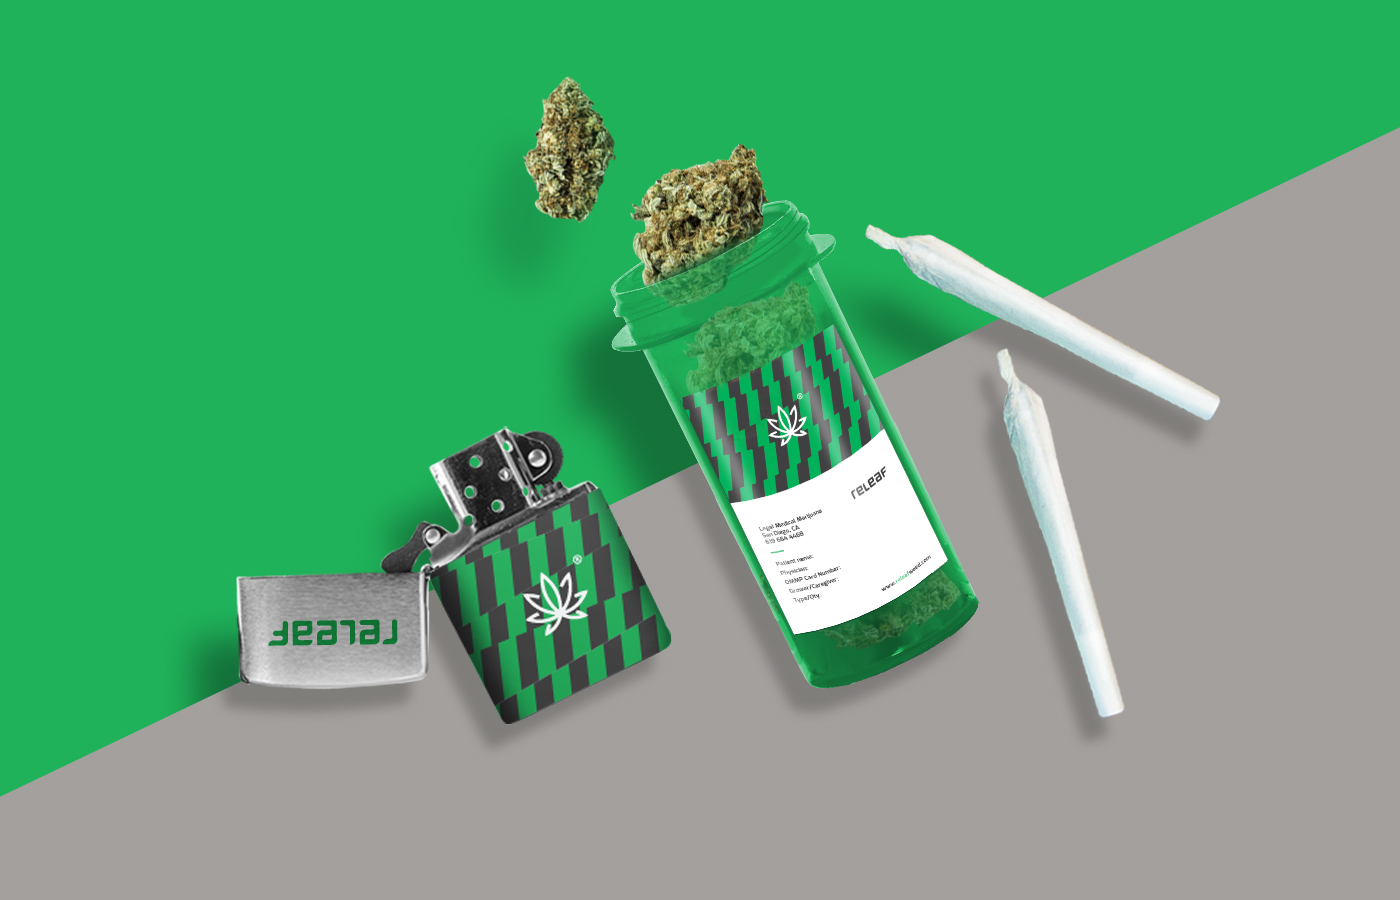 releaf marihuana marijuana weed Kush maryjane drug Drugs greenstuff dope Freelance independiente identity San Diego